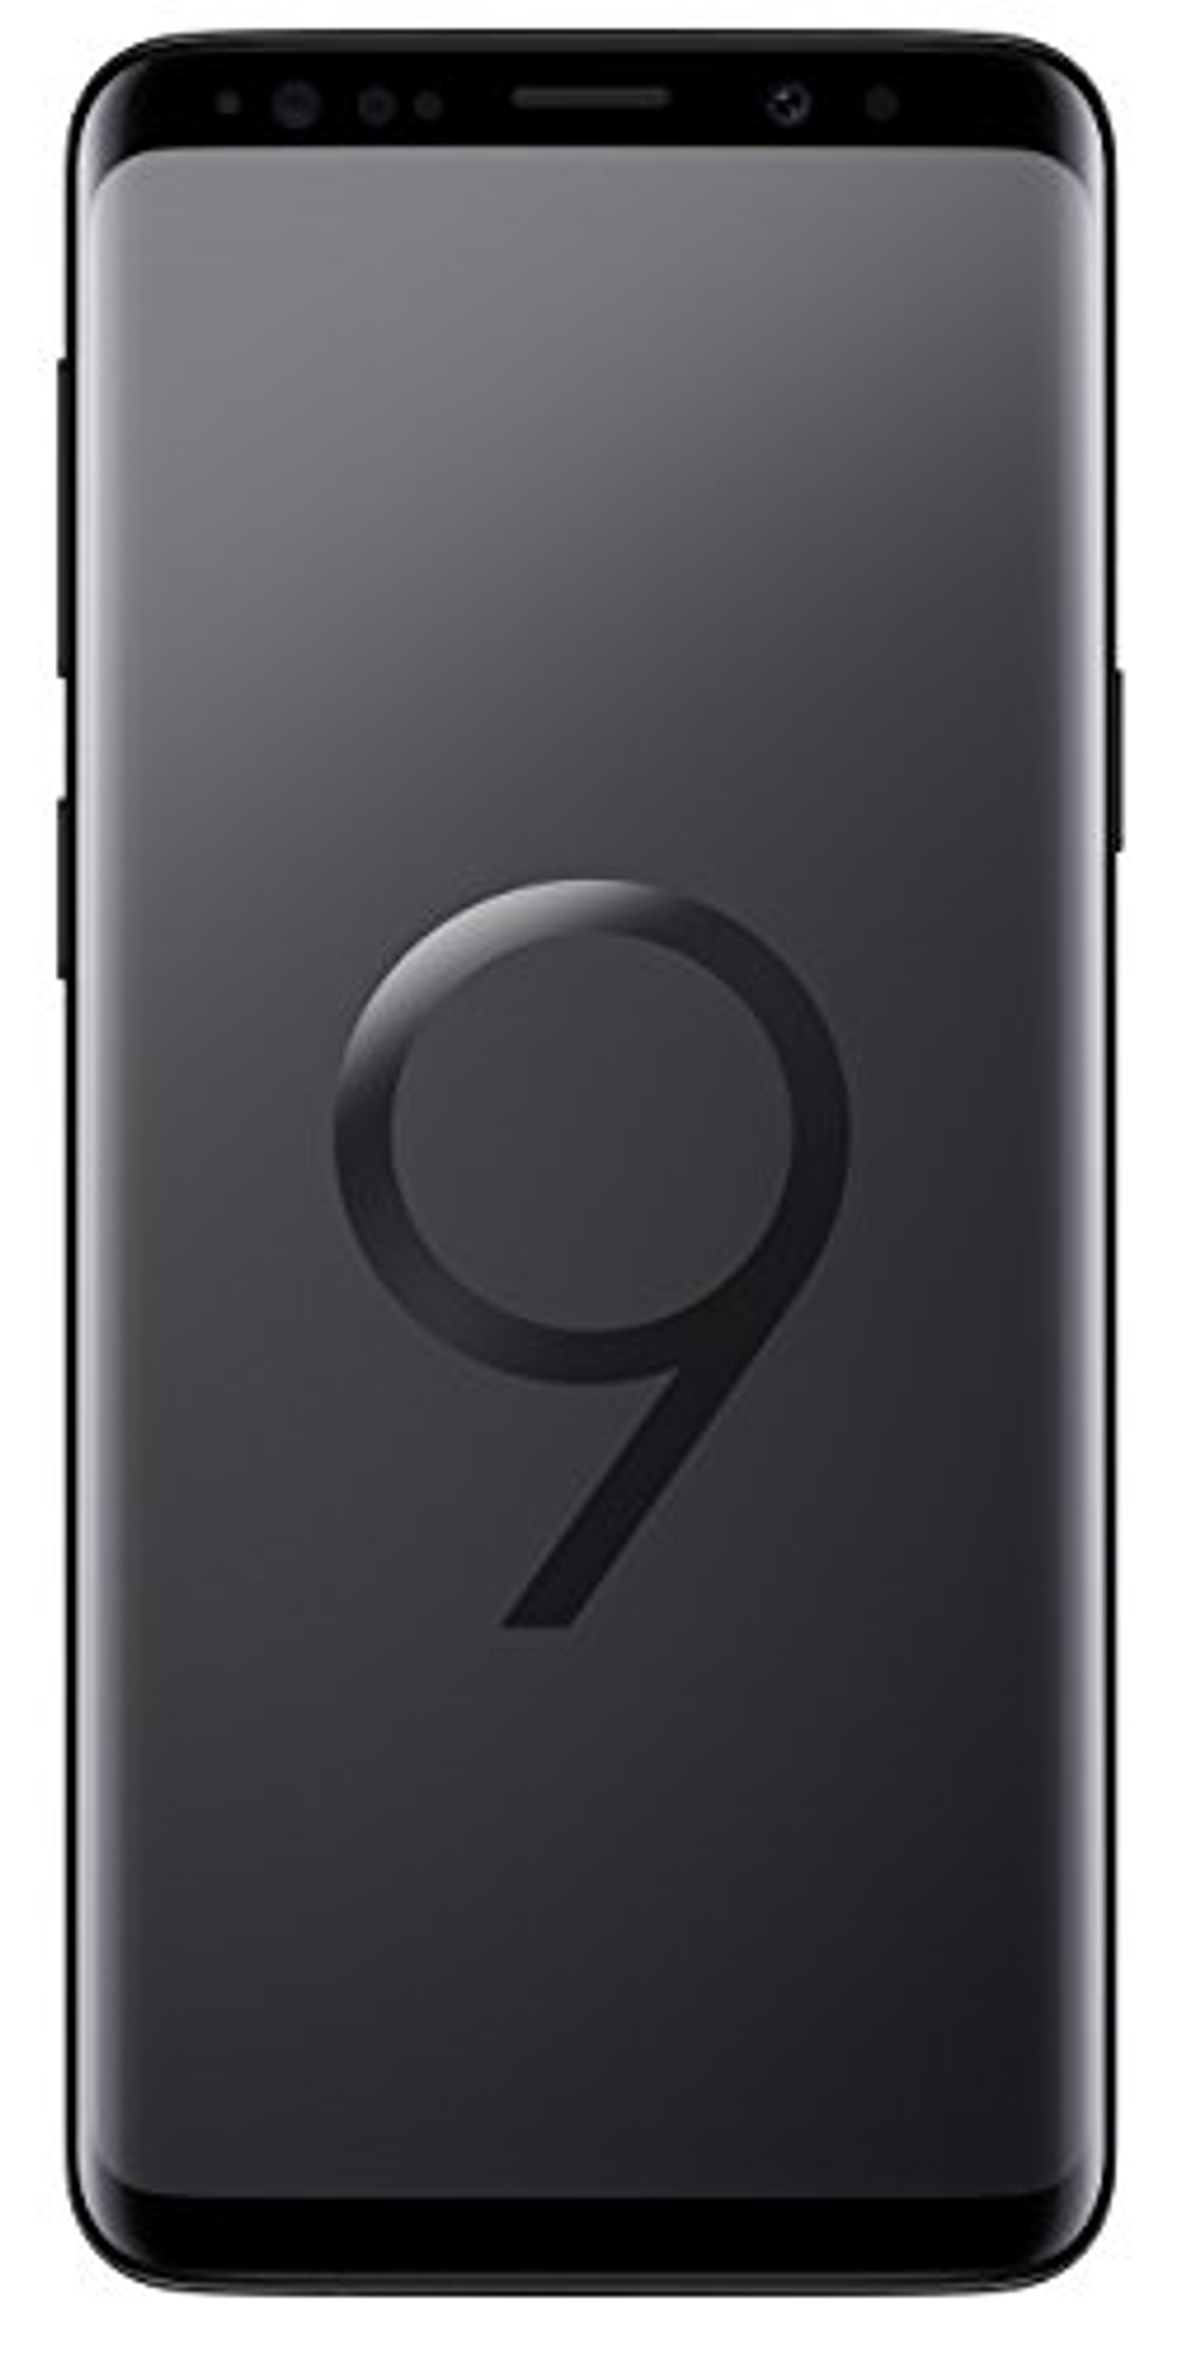 SAMSUNG GALAXY S9 BLACK Dual LTE GB Midnight 64 64GB SIM HYBRID Black